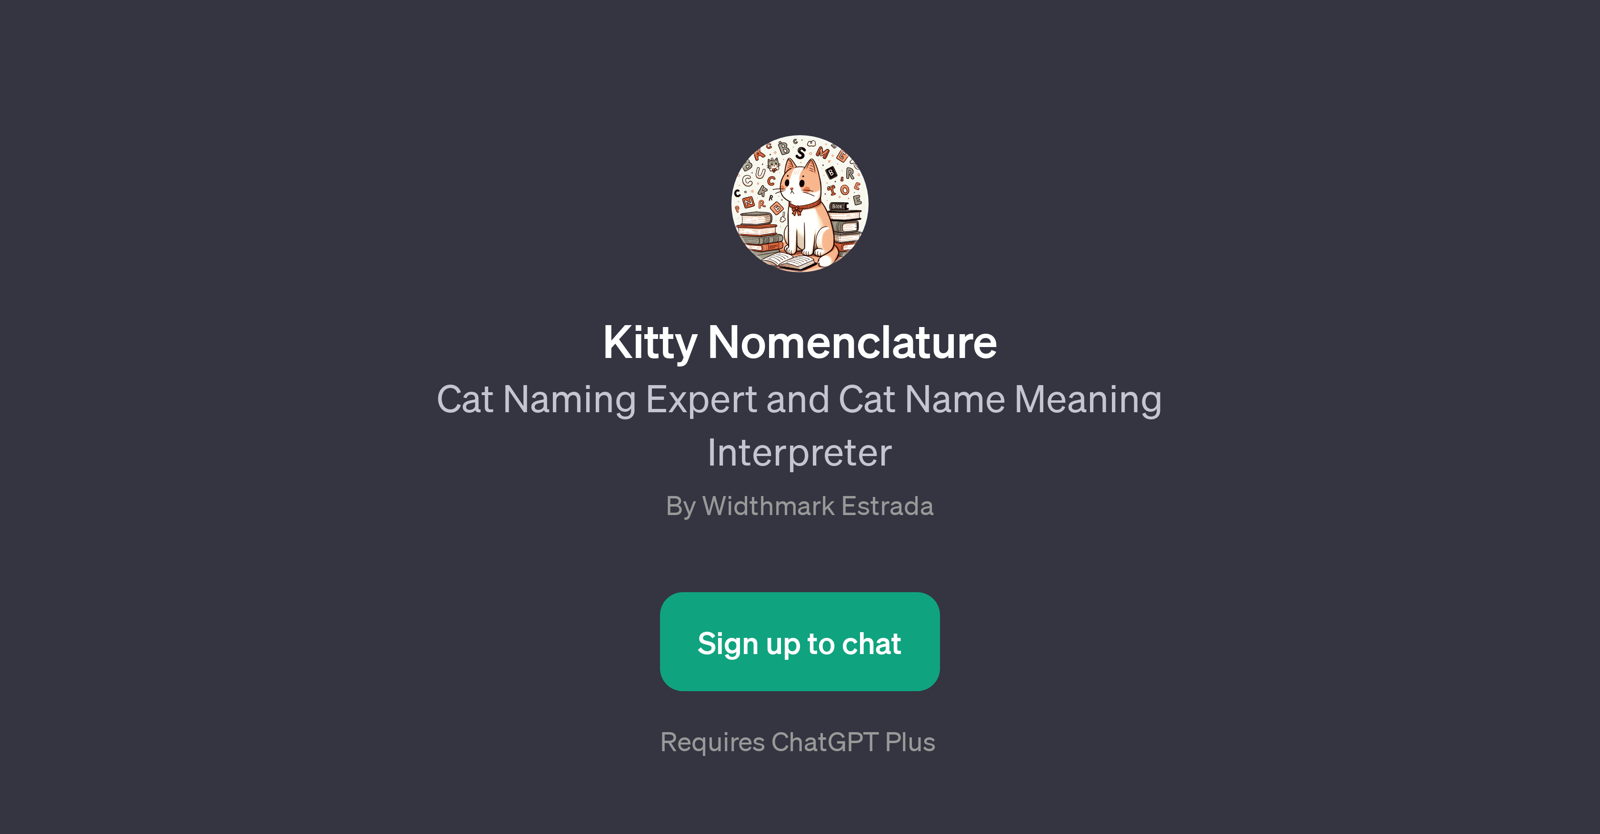 Kitty Nomenclature website